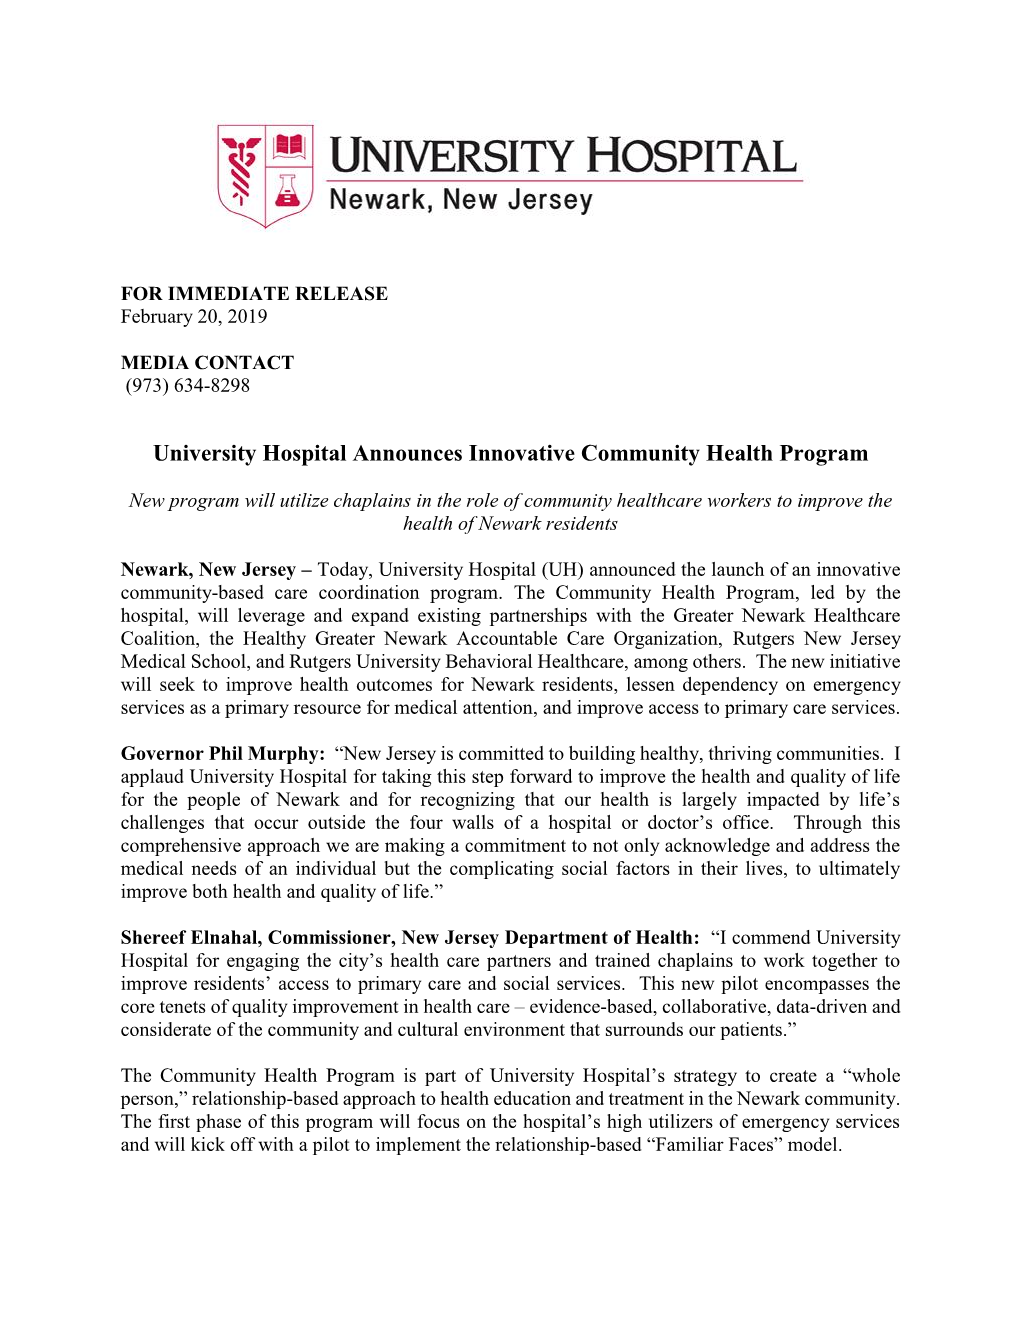 University Hospital Announces Innovative Community Health Program